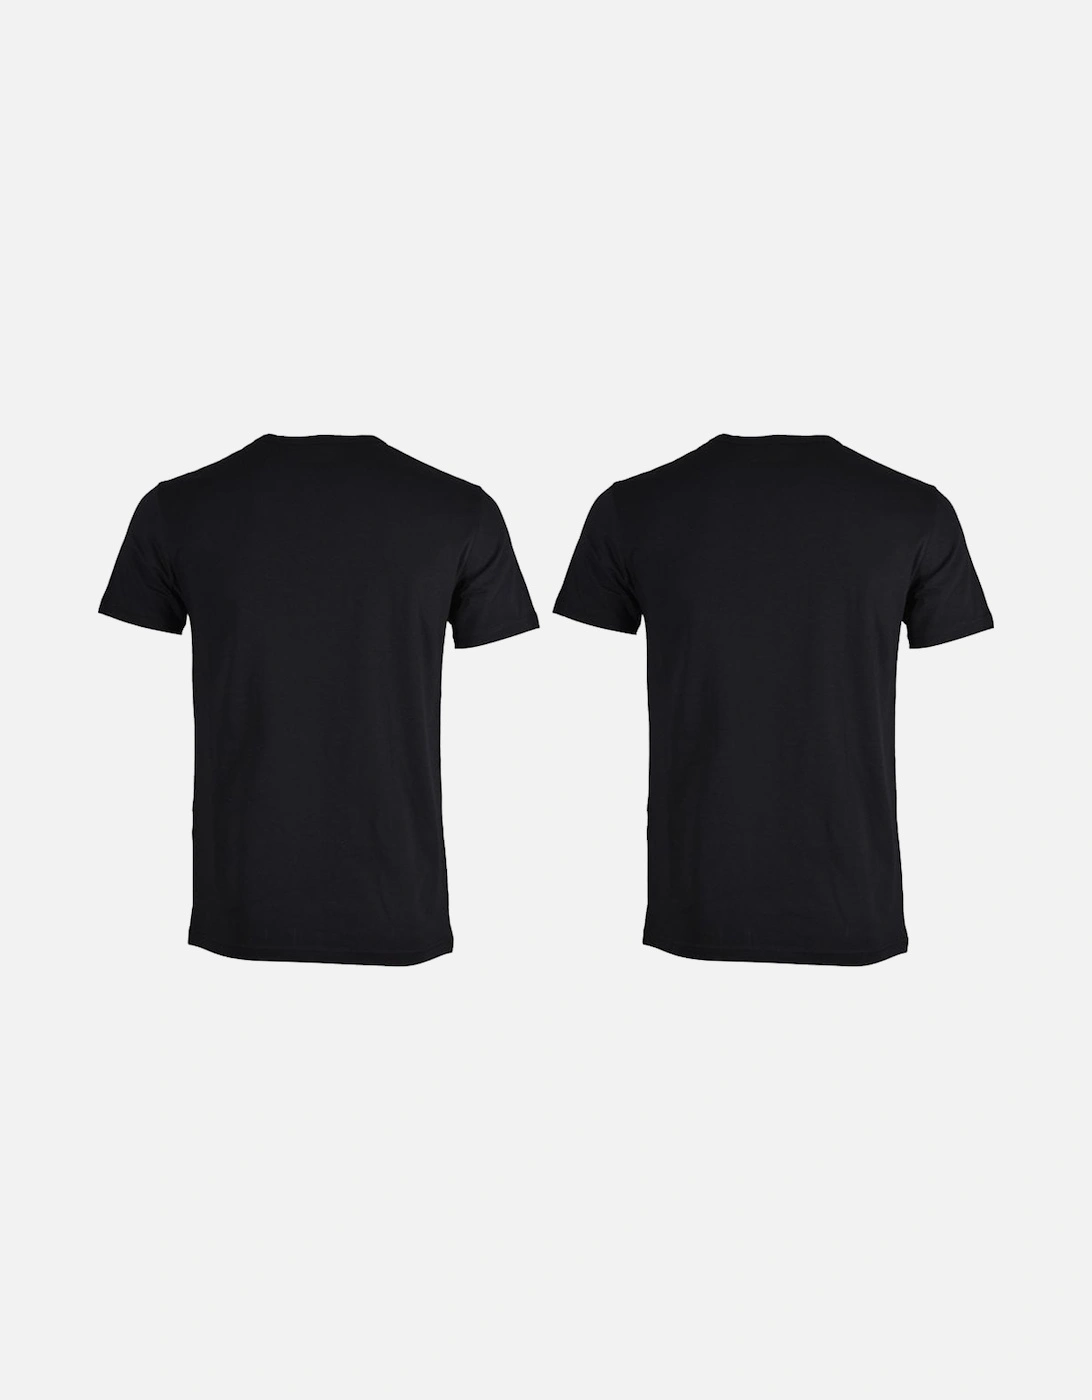 Cotton 2Pack Round Neck Black T-Shirt